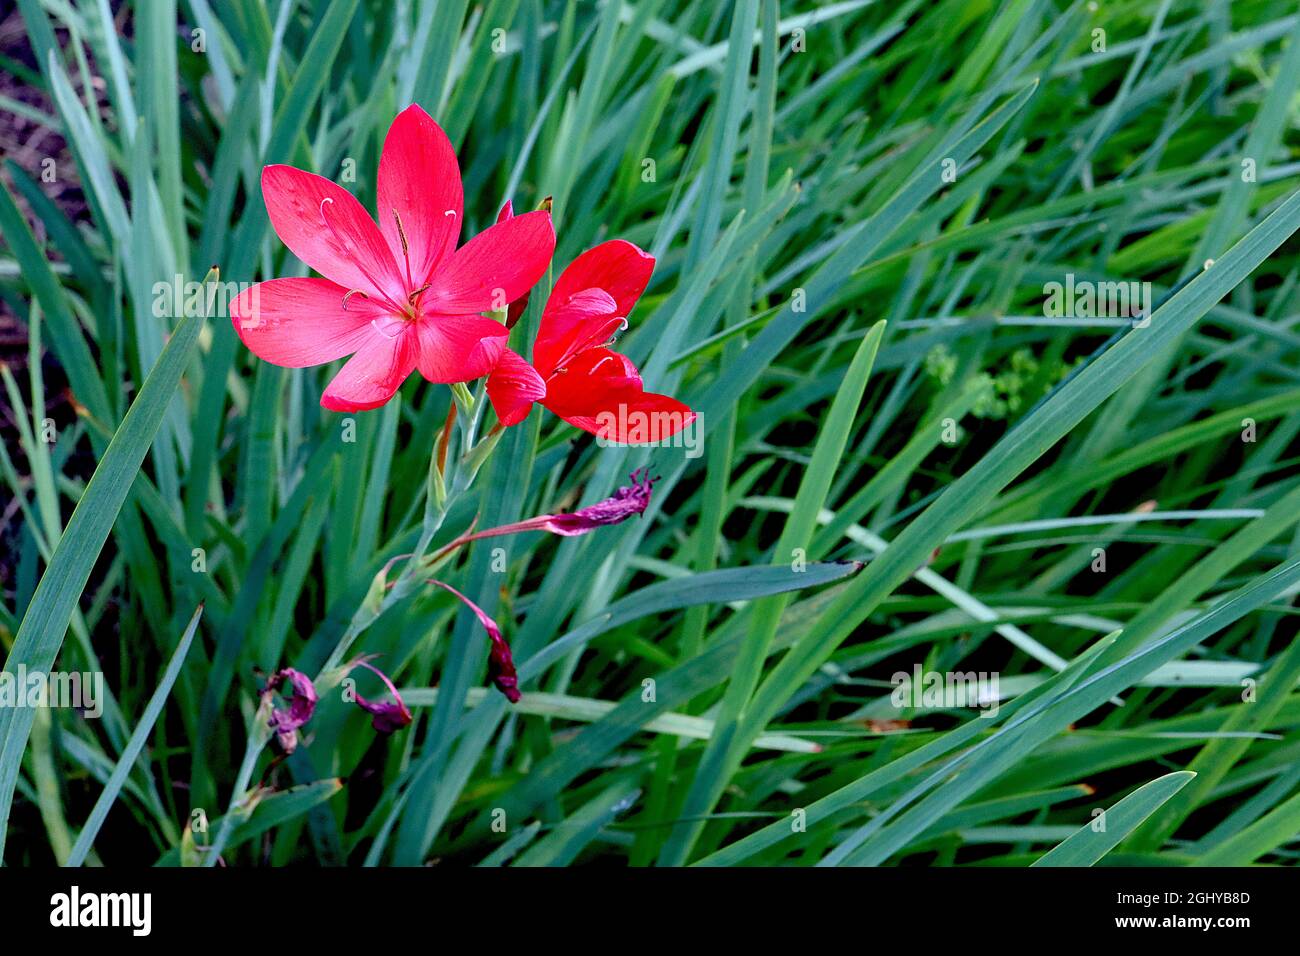 Hesperantha / Schizostylis coccinea ‘Major’ crimson flag lily Major – crimson red flowers and narrow sword-shaped leaves,  August, England, UK Stock Photo